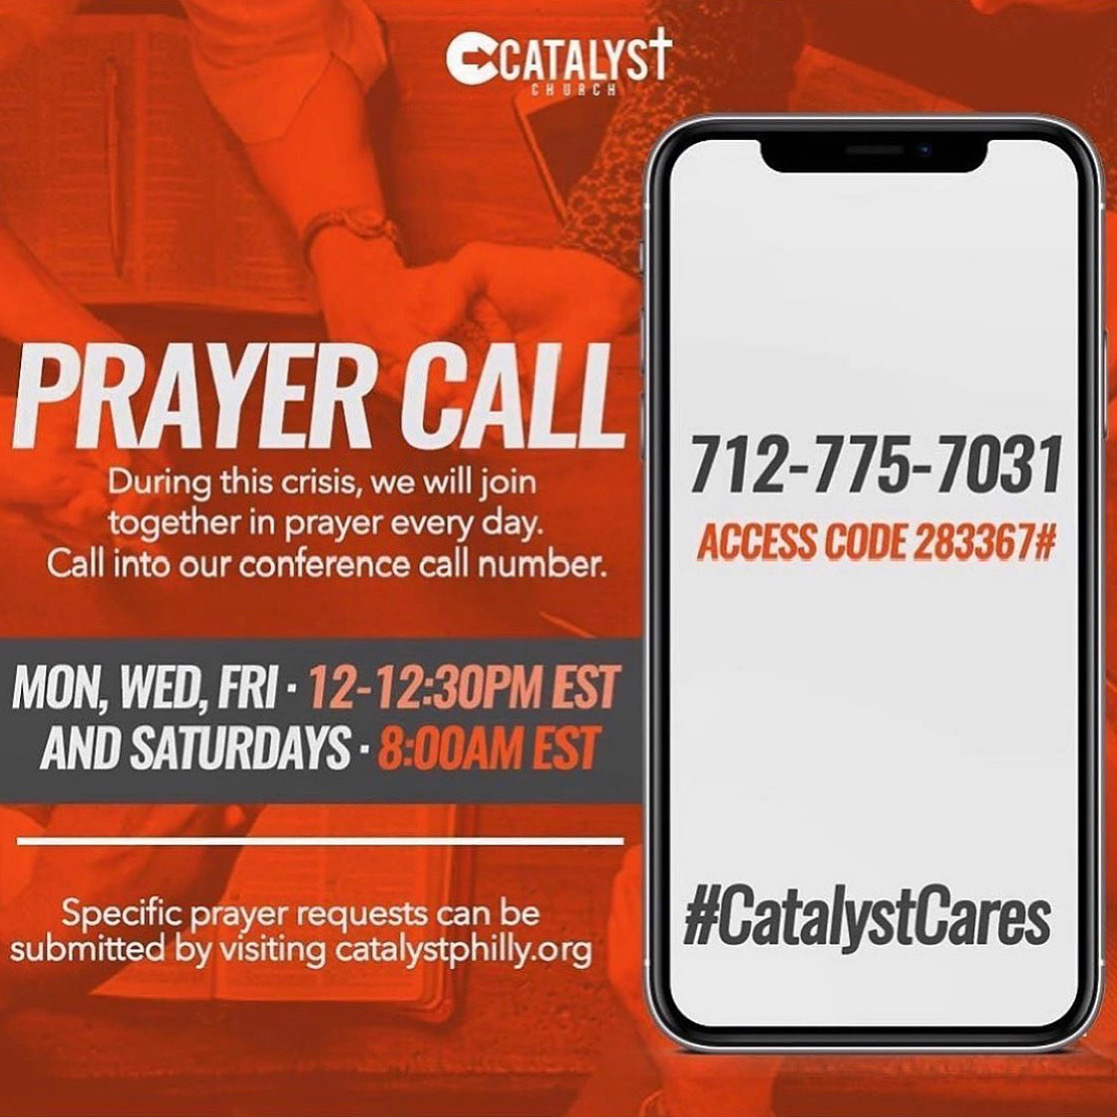 Prayer Call @ 712-775-7031 Access Code: 283367